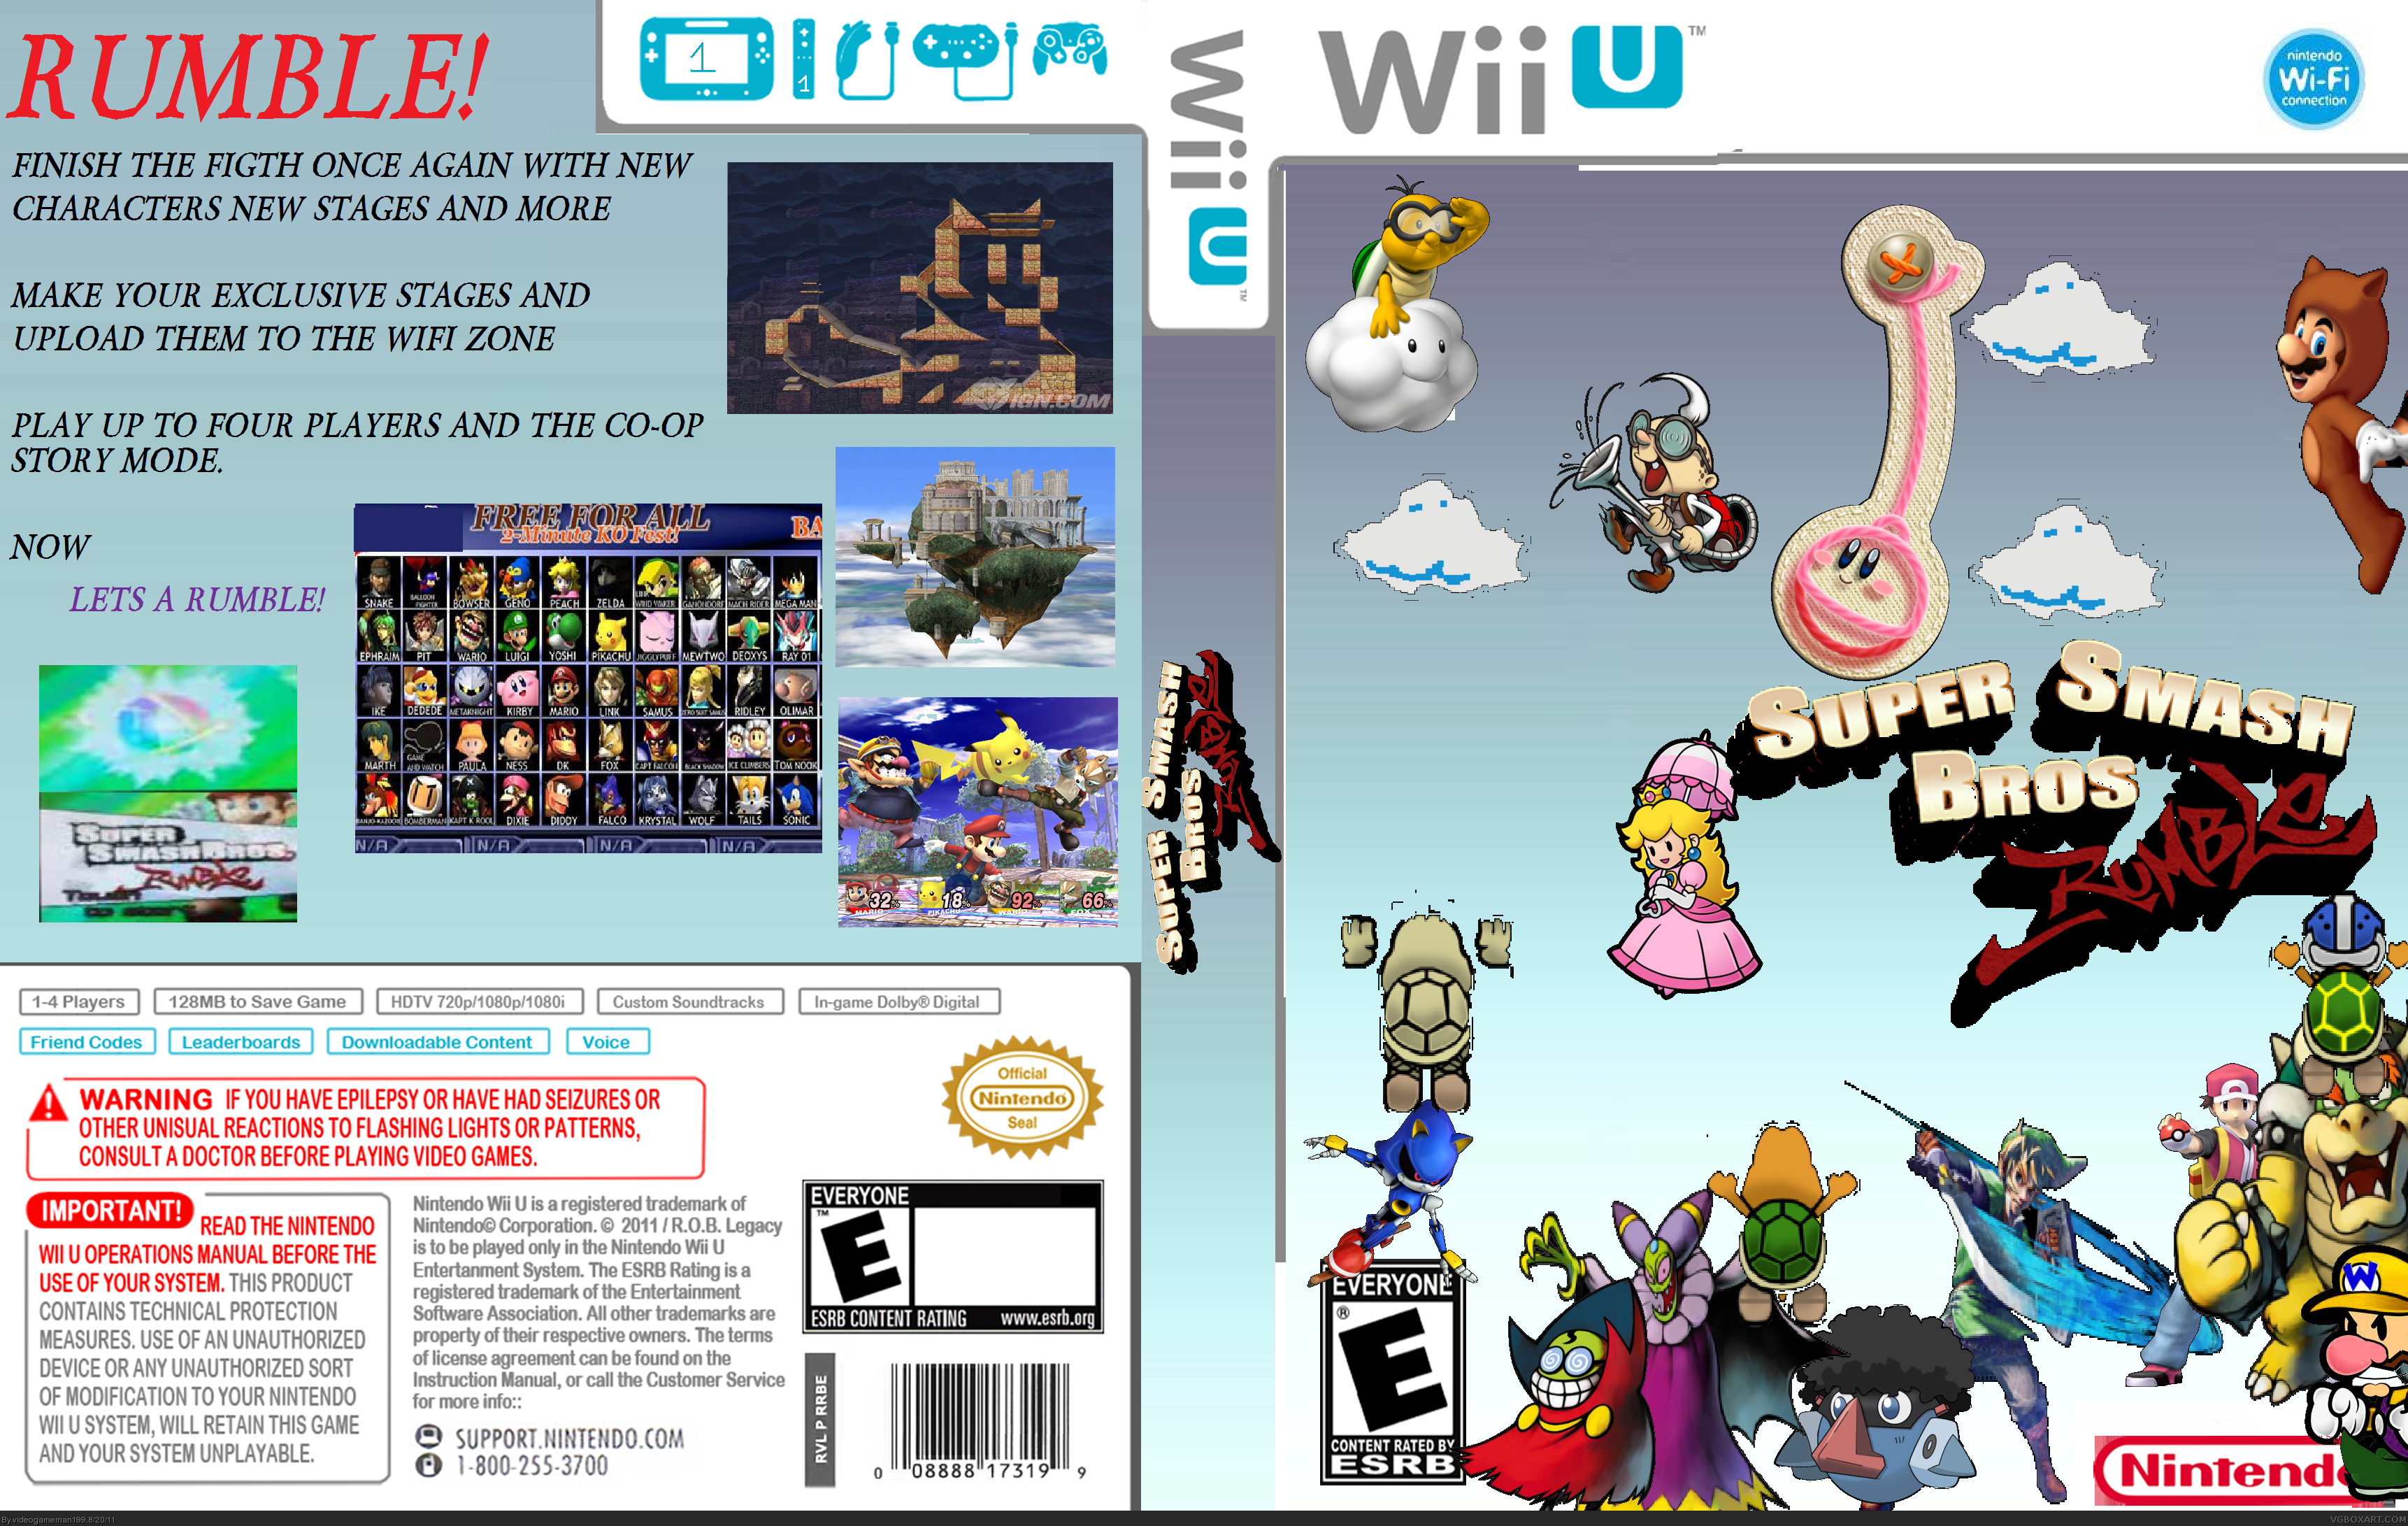 Super Smash Bros. Rumble Wii U box cover